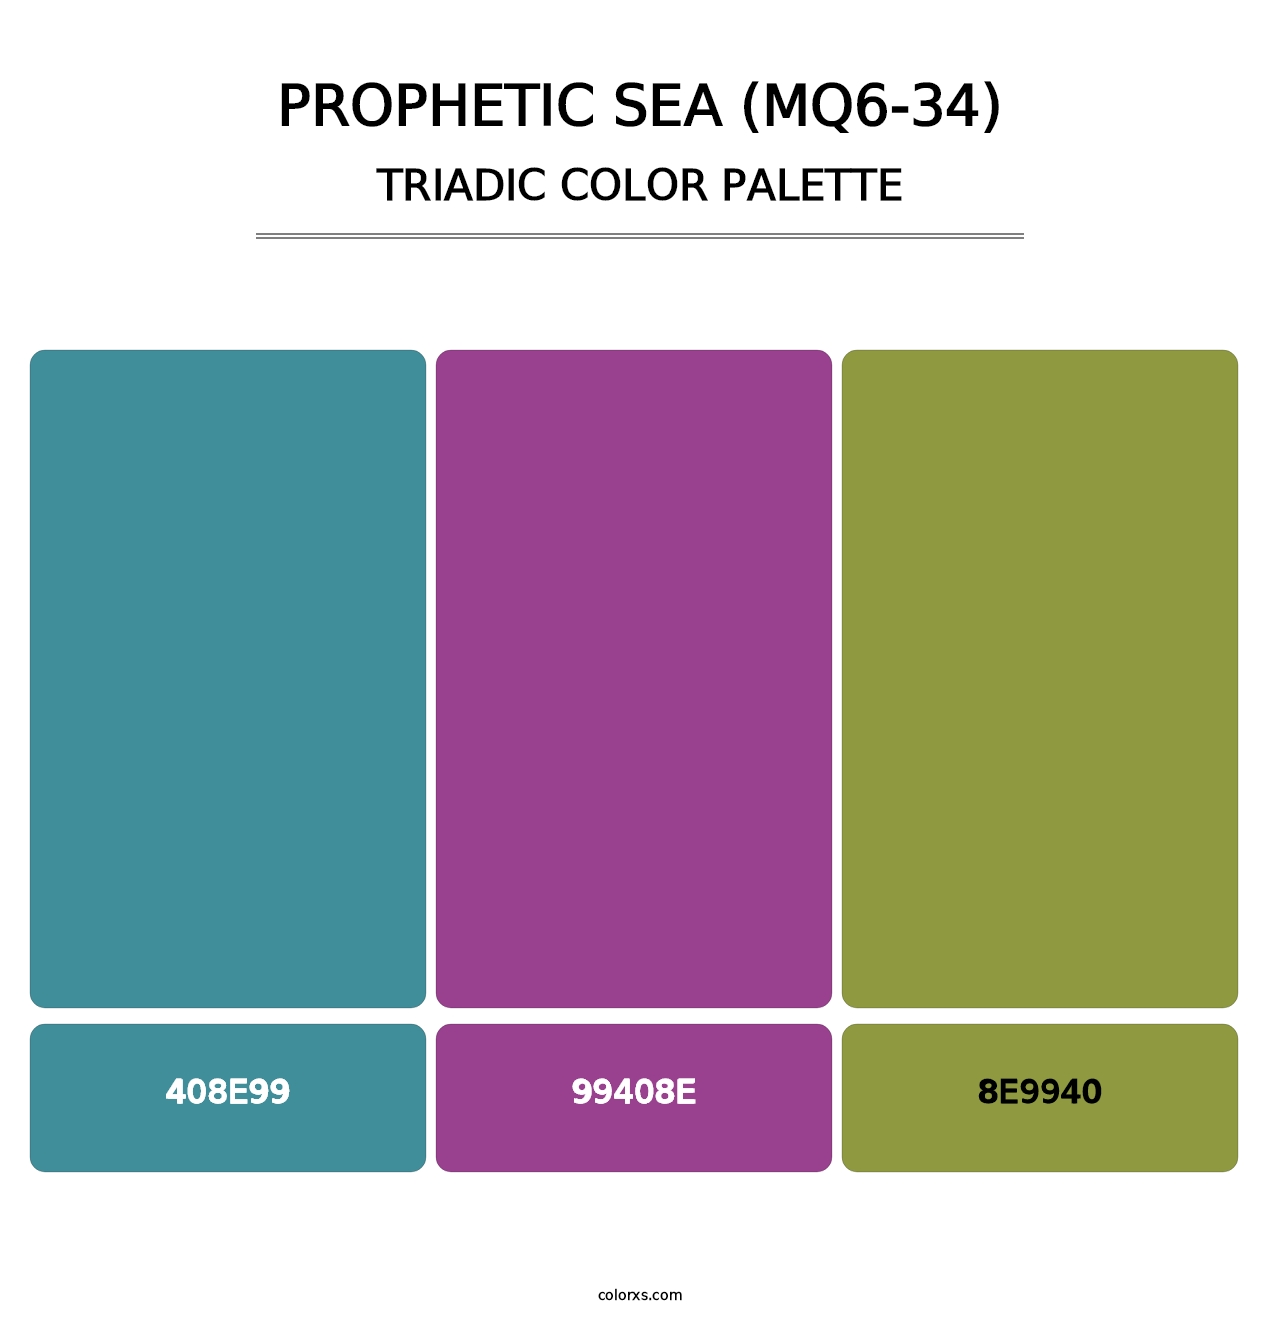 Prophetic Sea (MQ6-34) - Triadic Color Palette